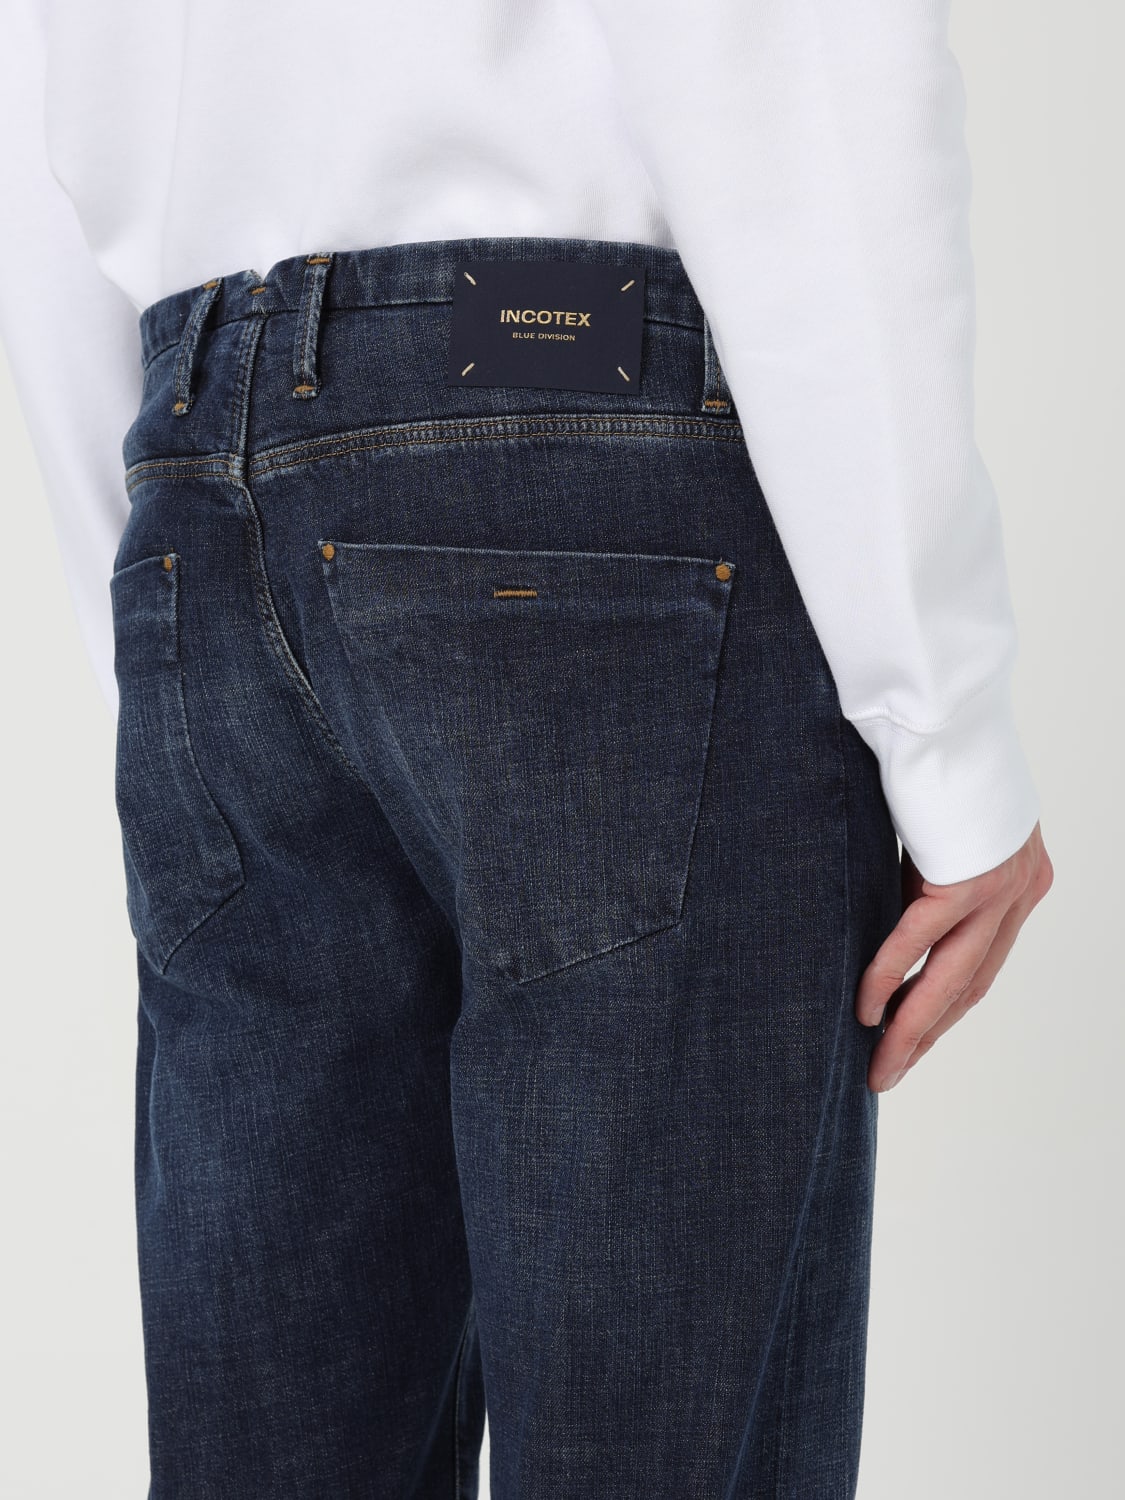 INCOTEX JEANS: acquista online | Jeans Incotex uomo - BDPX0001SLIM02615 ...